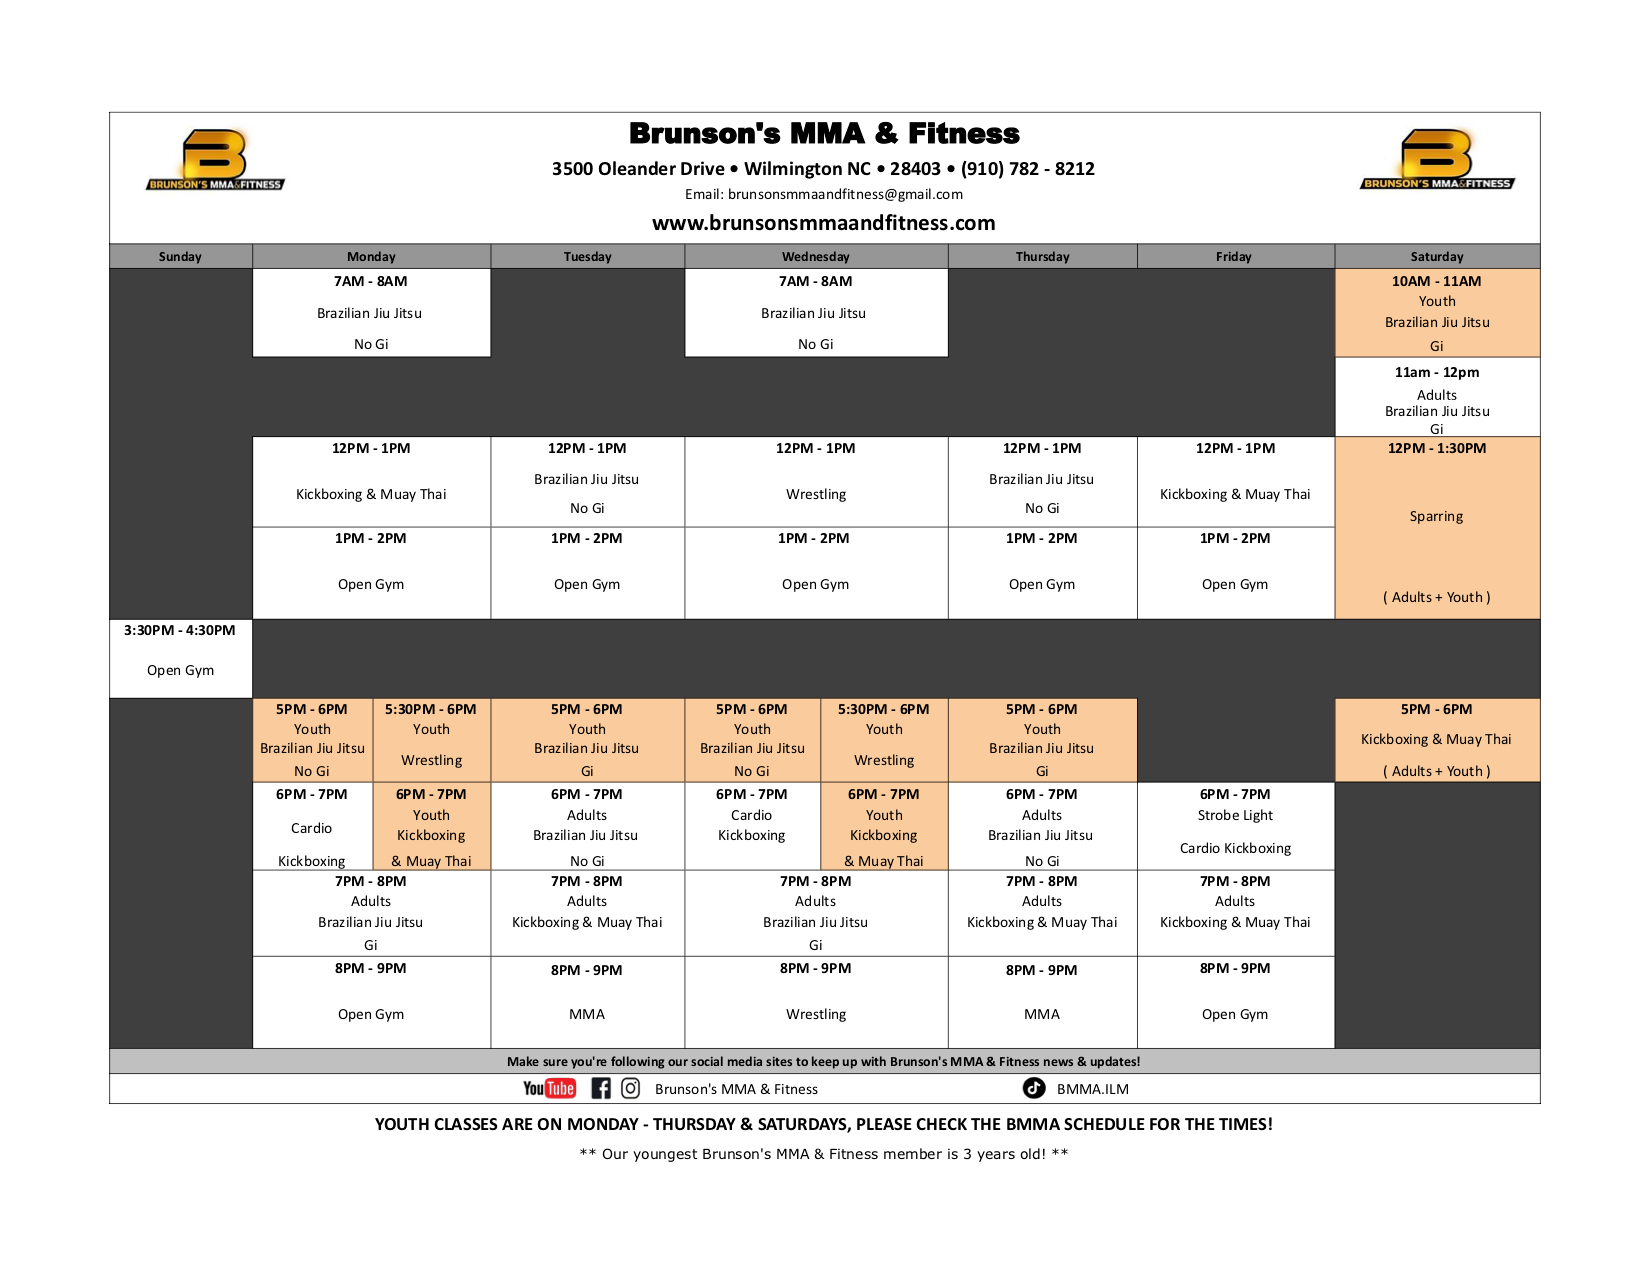 BMMA schedule